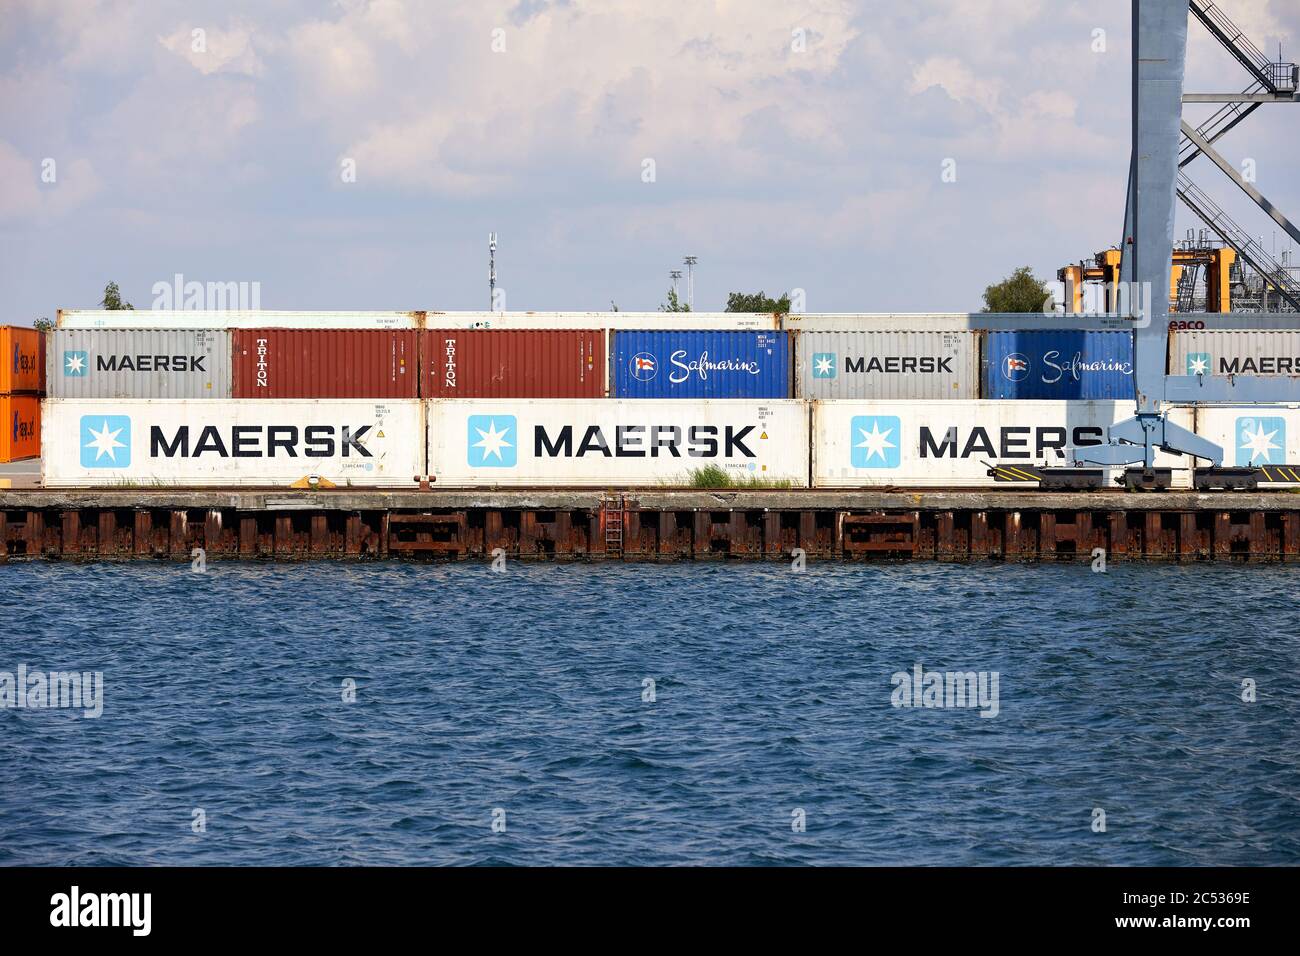 Maersk shipping containers, Copenhagen Harbour, Copenhagen, Denmark Stock Photo